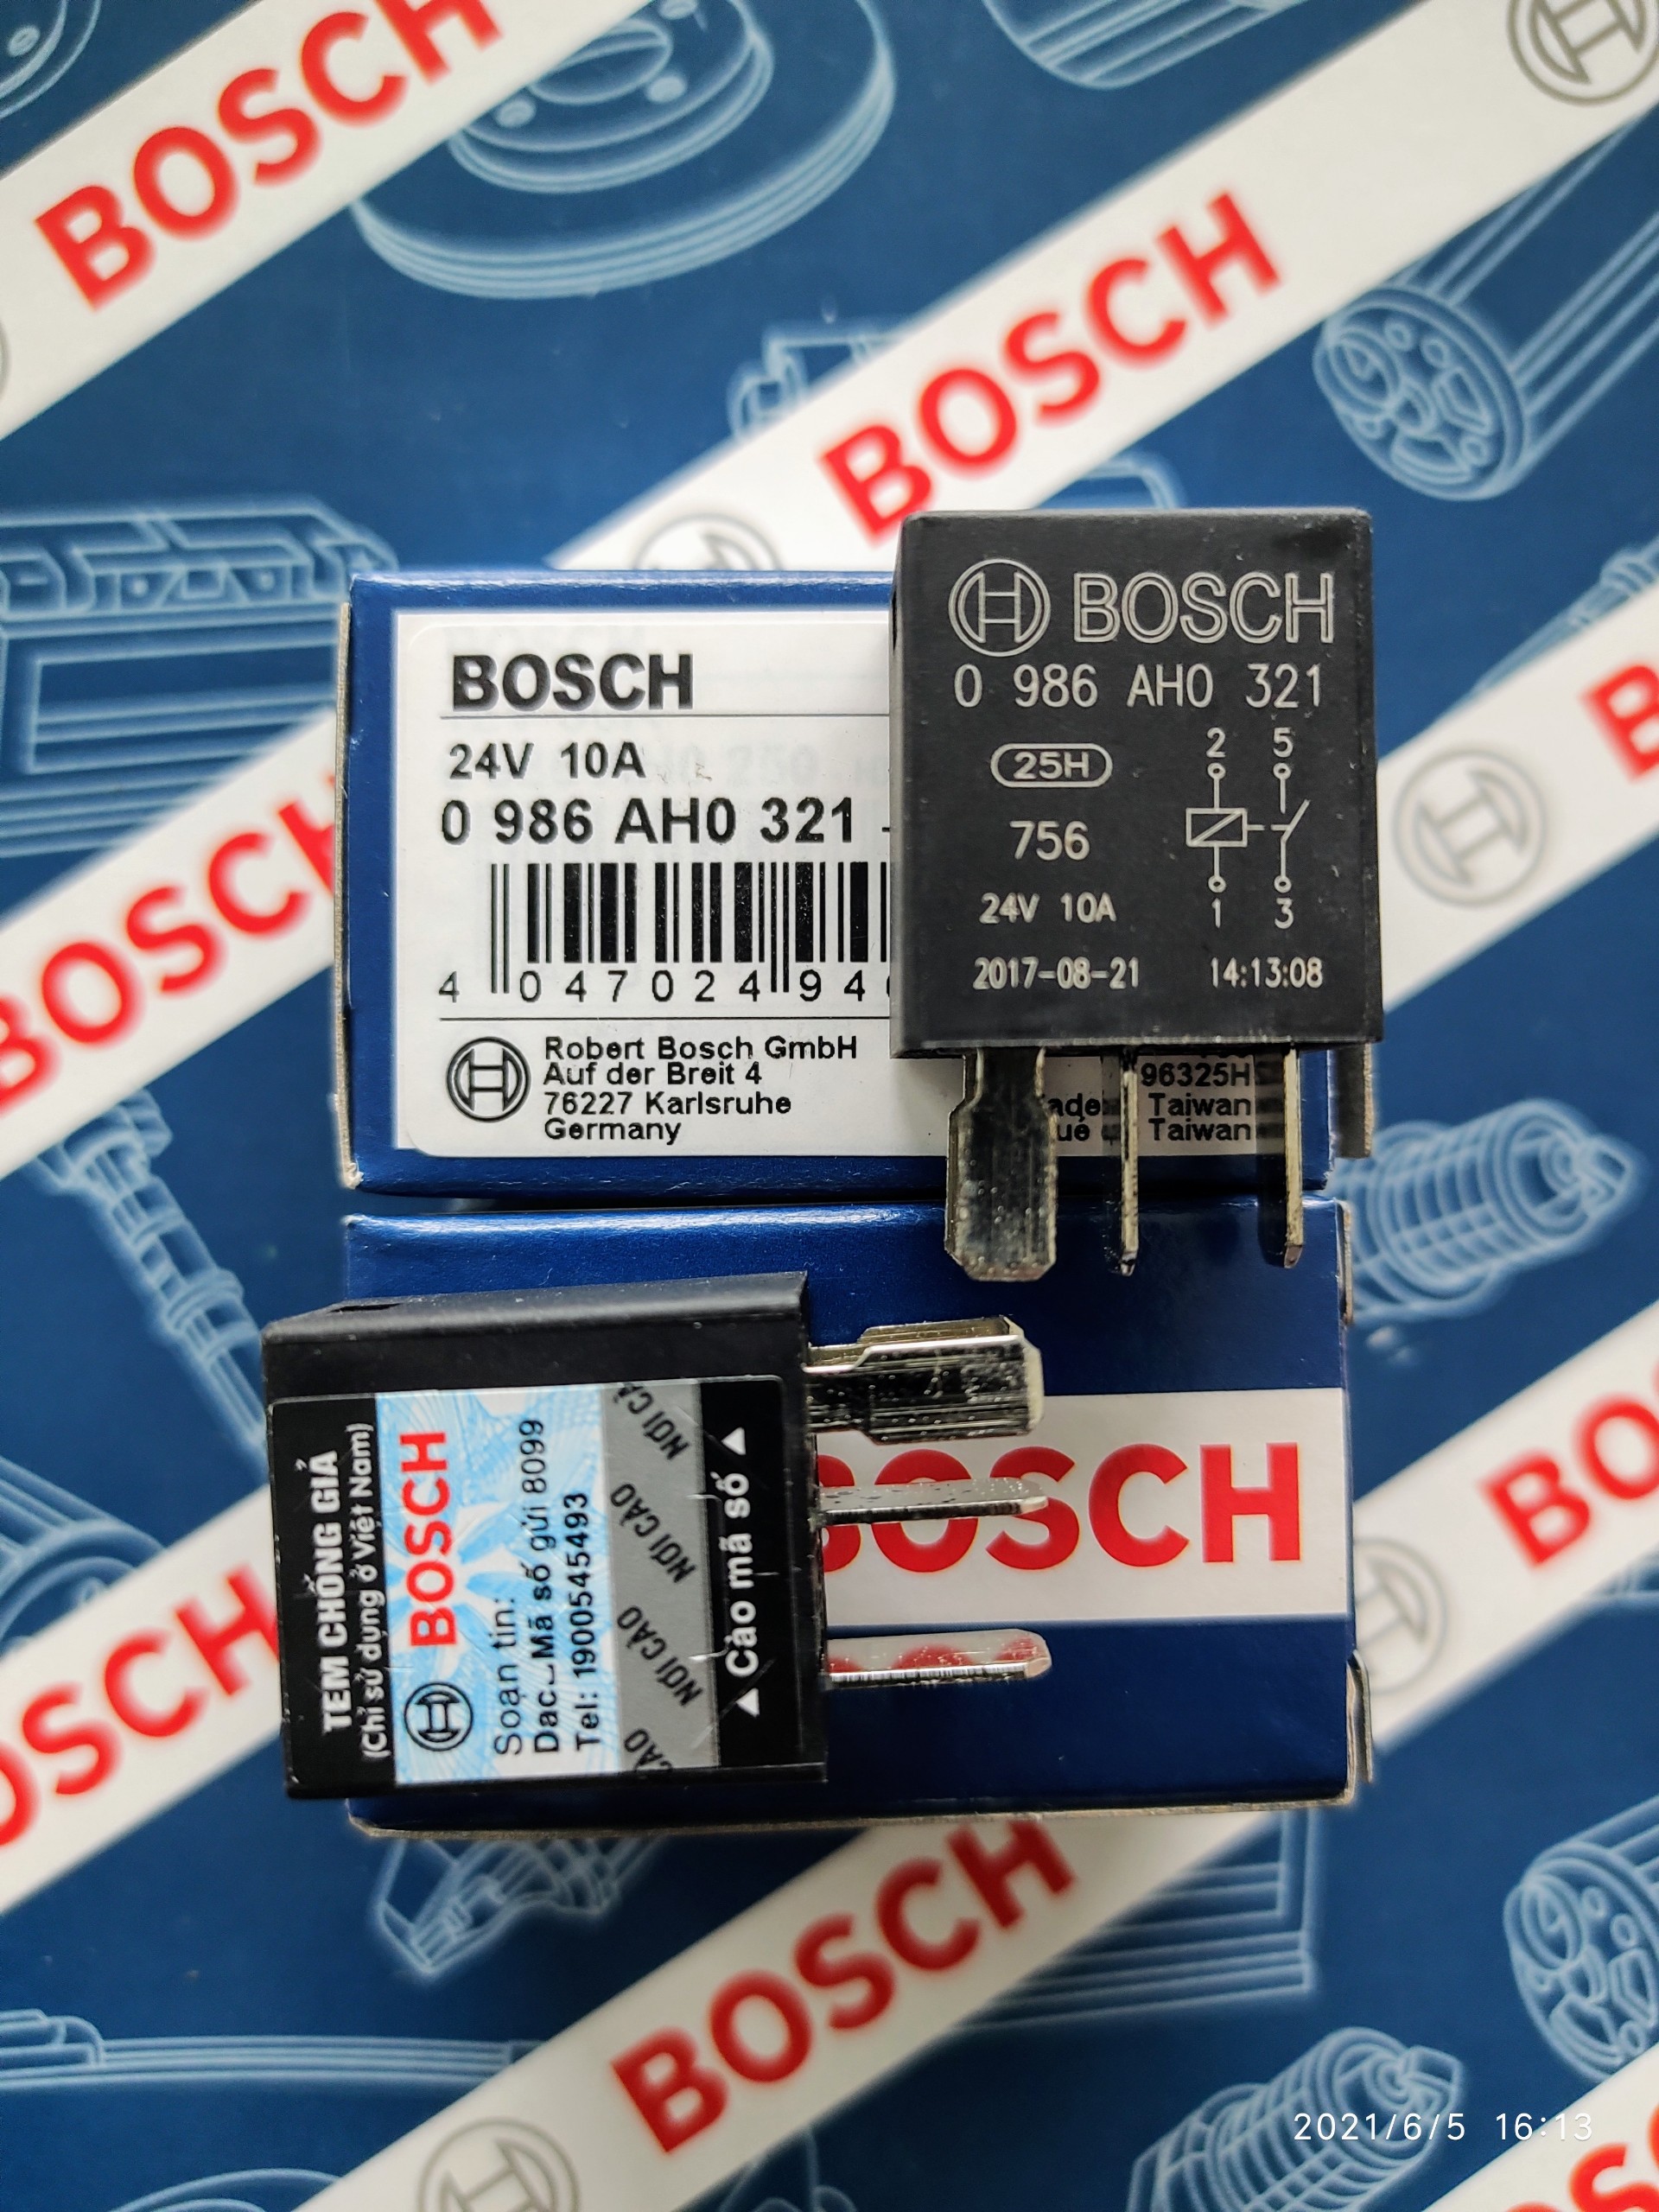 Relay Rờ le Mini Bosch 4 Chân 24V 10A - Relay 321